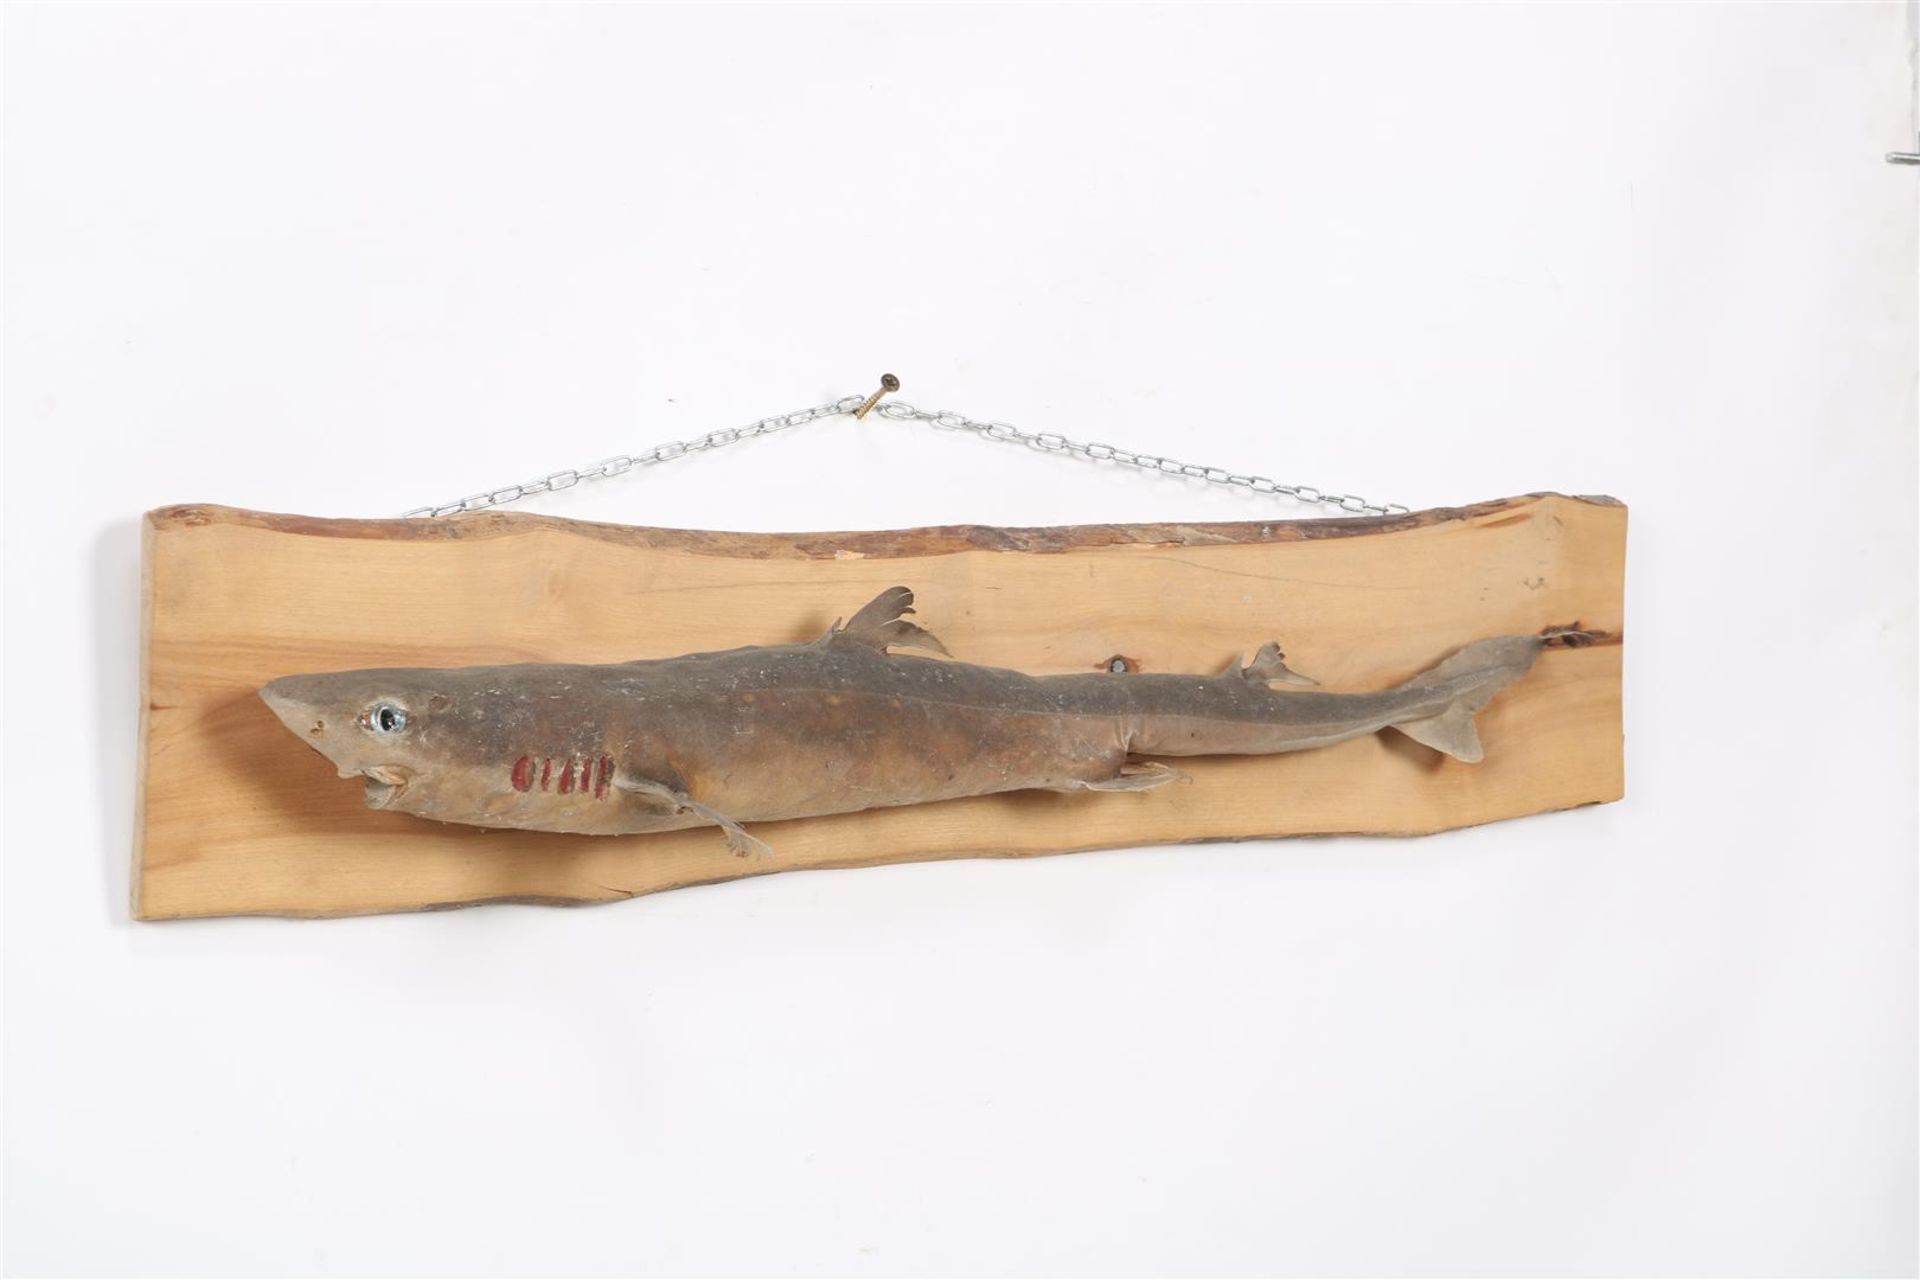 Prepared sand shark - Image 2 of 5